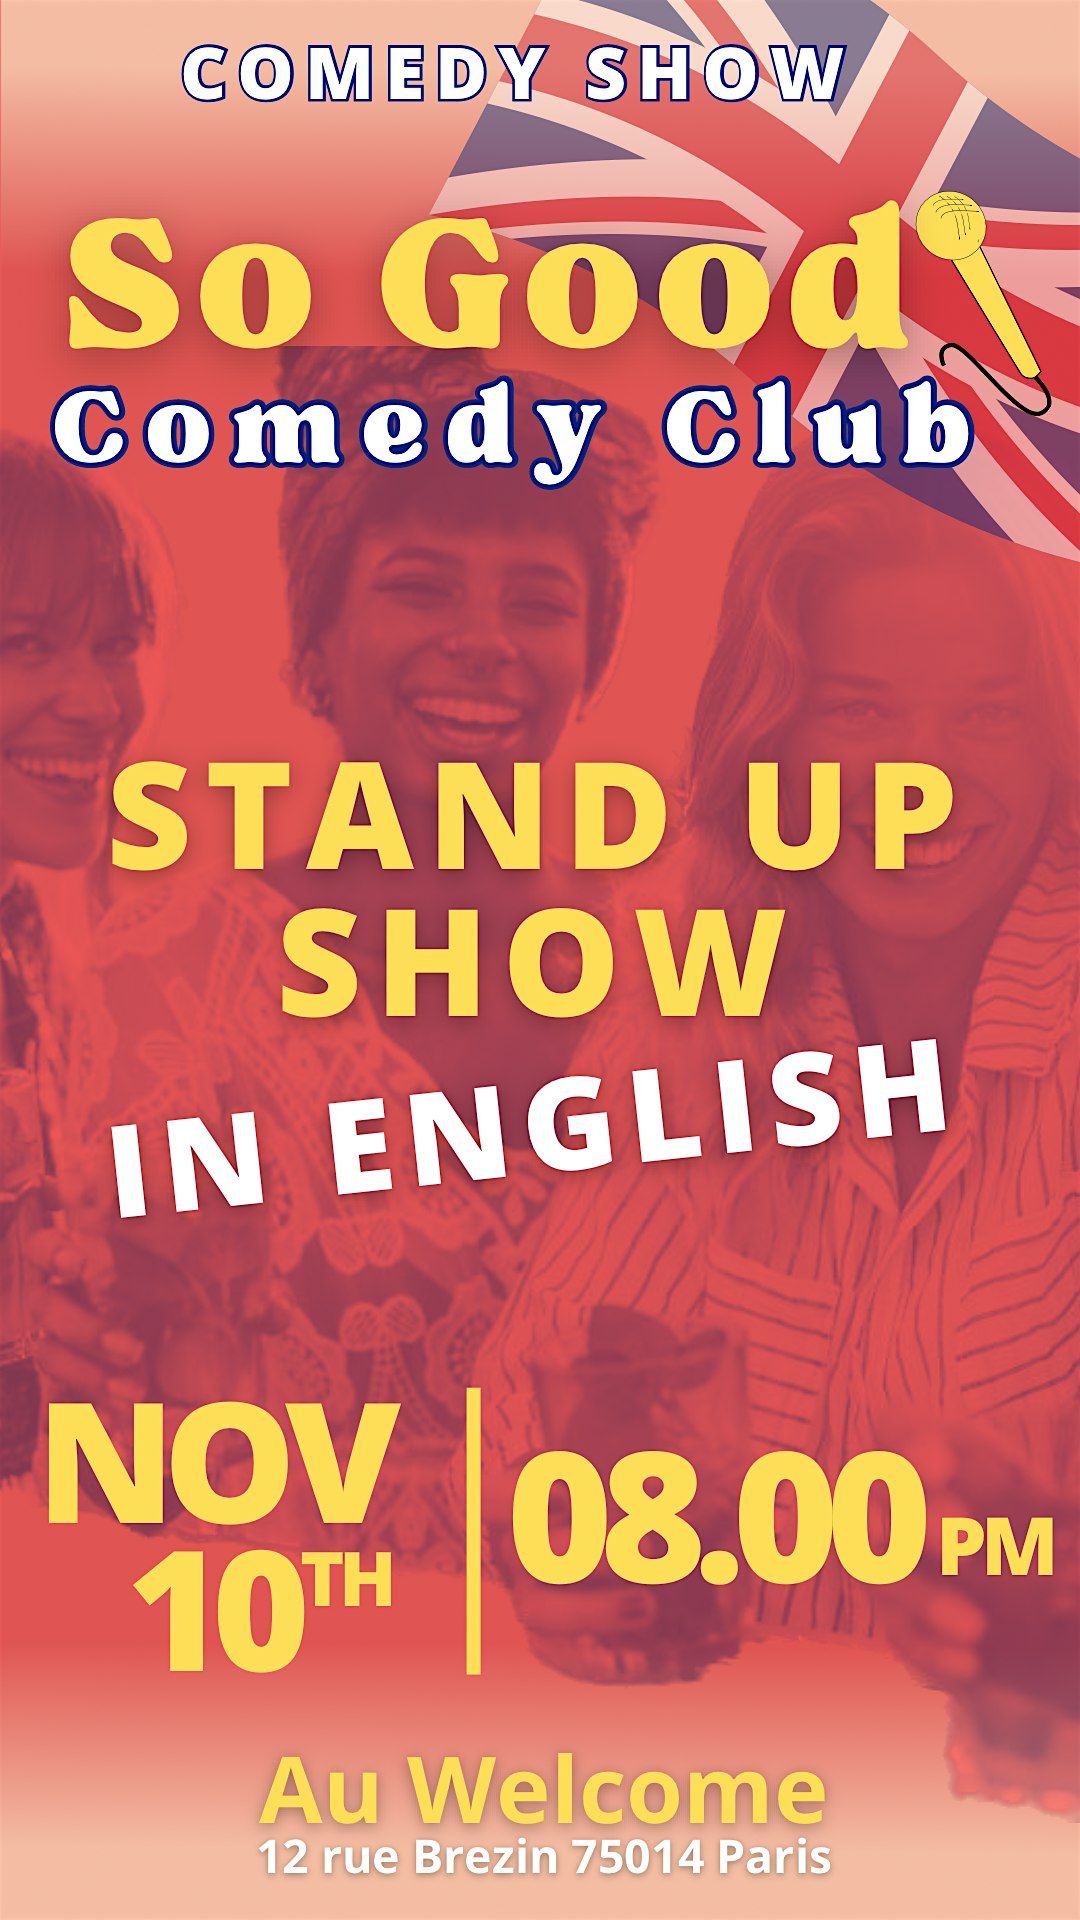 Internantional So Good Comedy Club - Show in ENGLISH